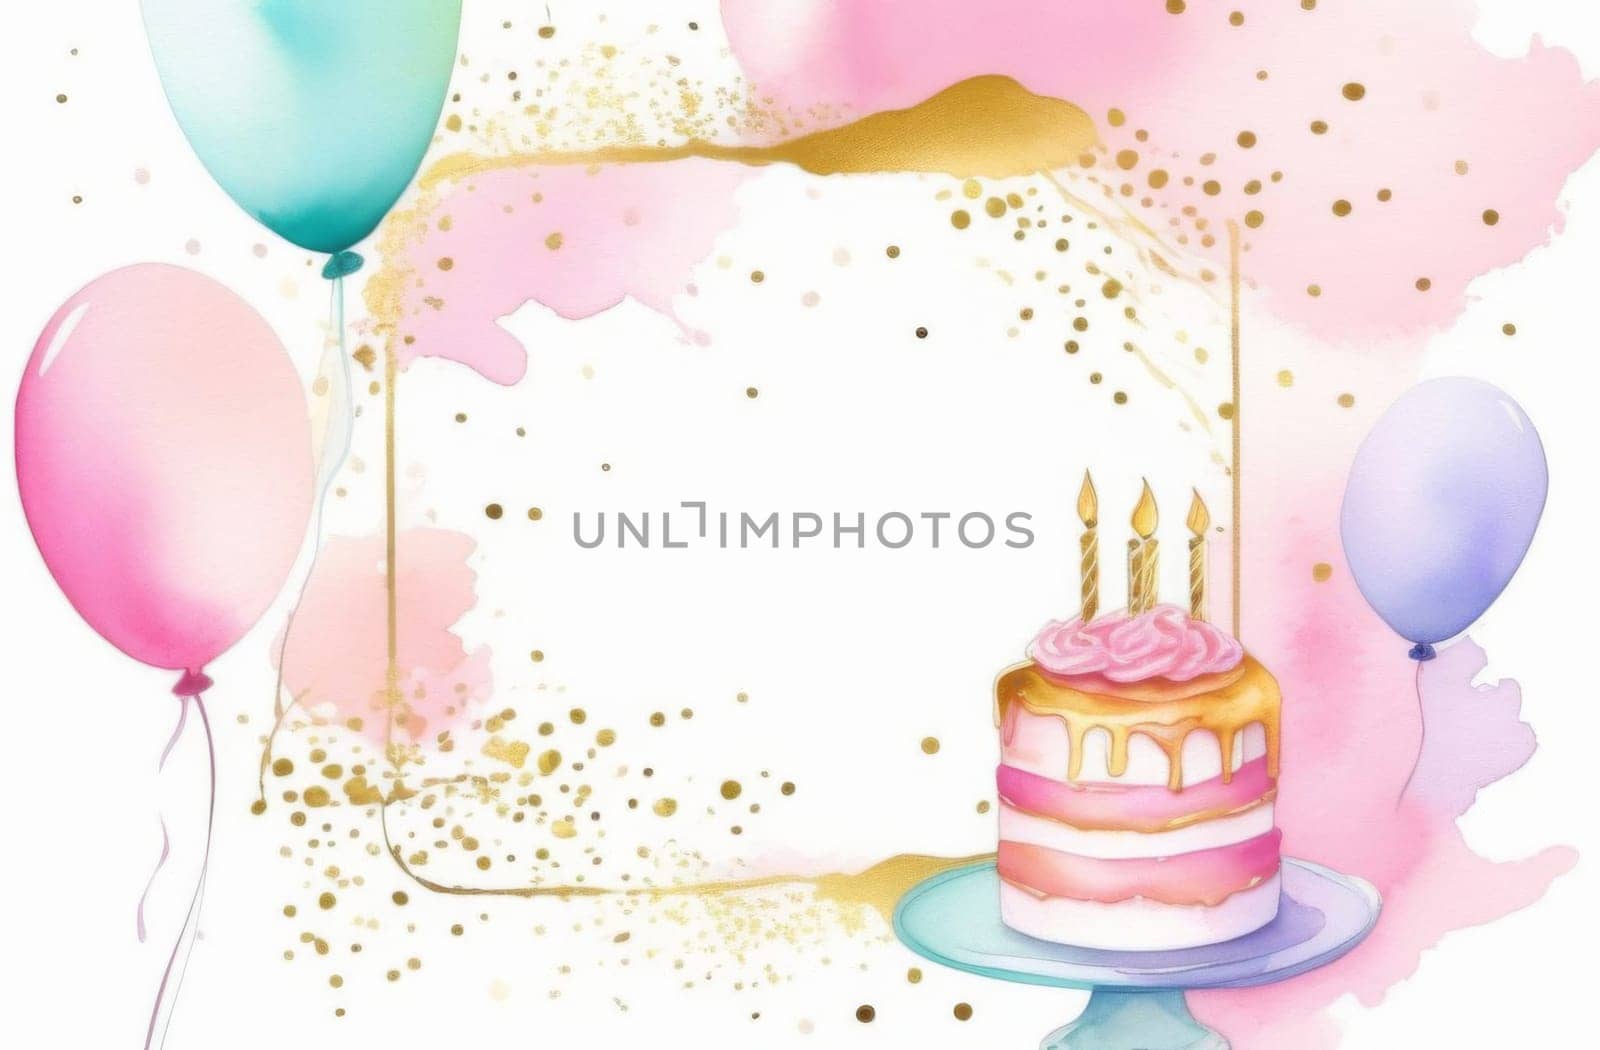 Birthday invitation with balloons and cake by Godi